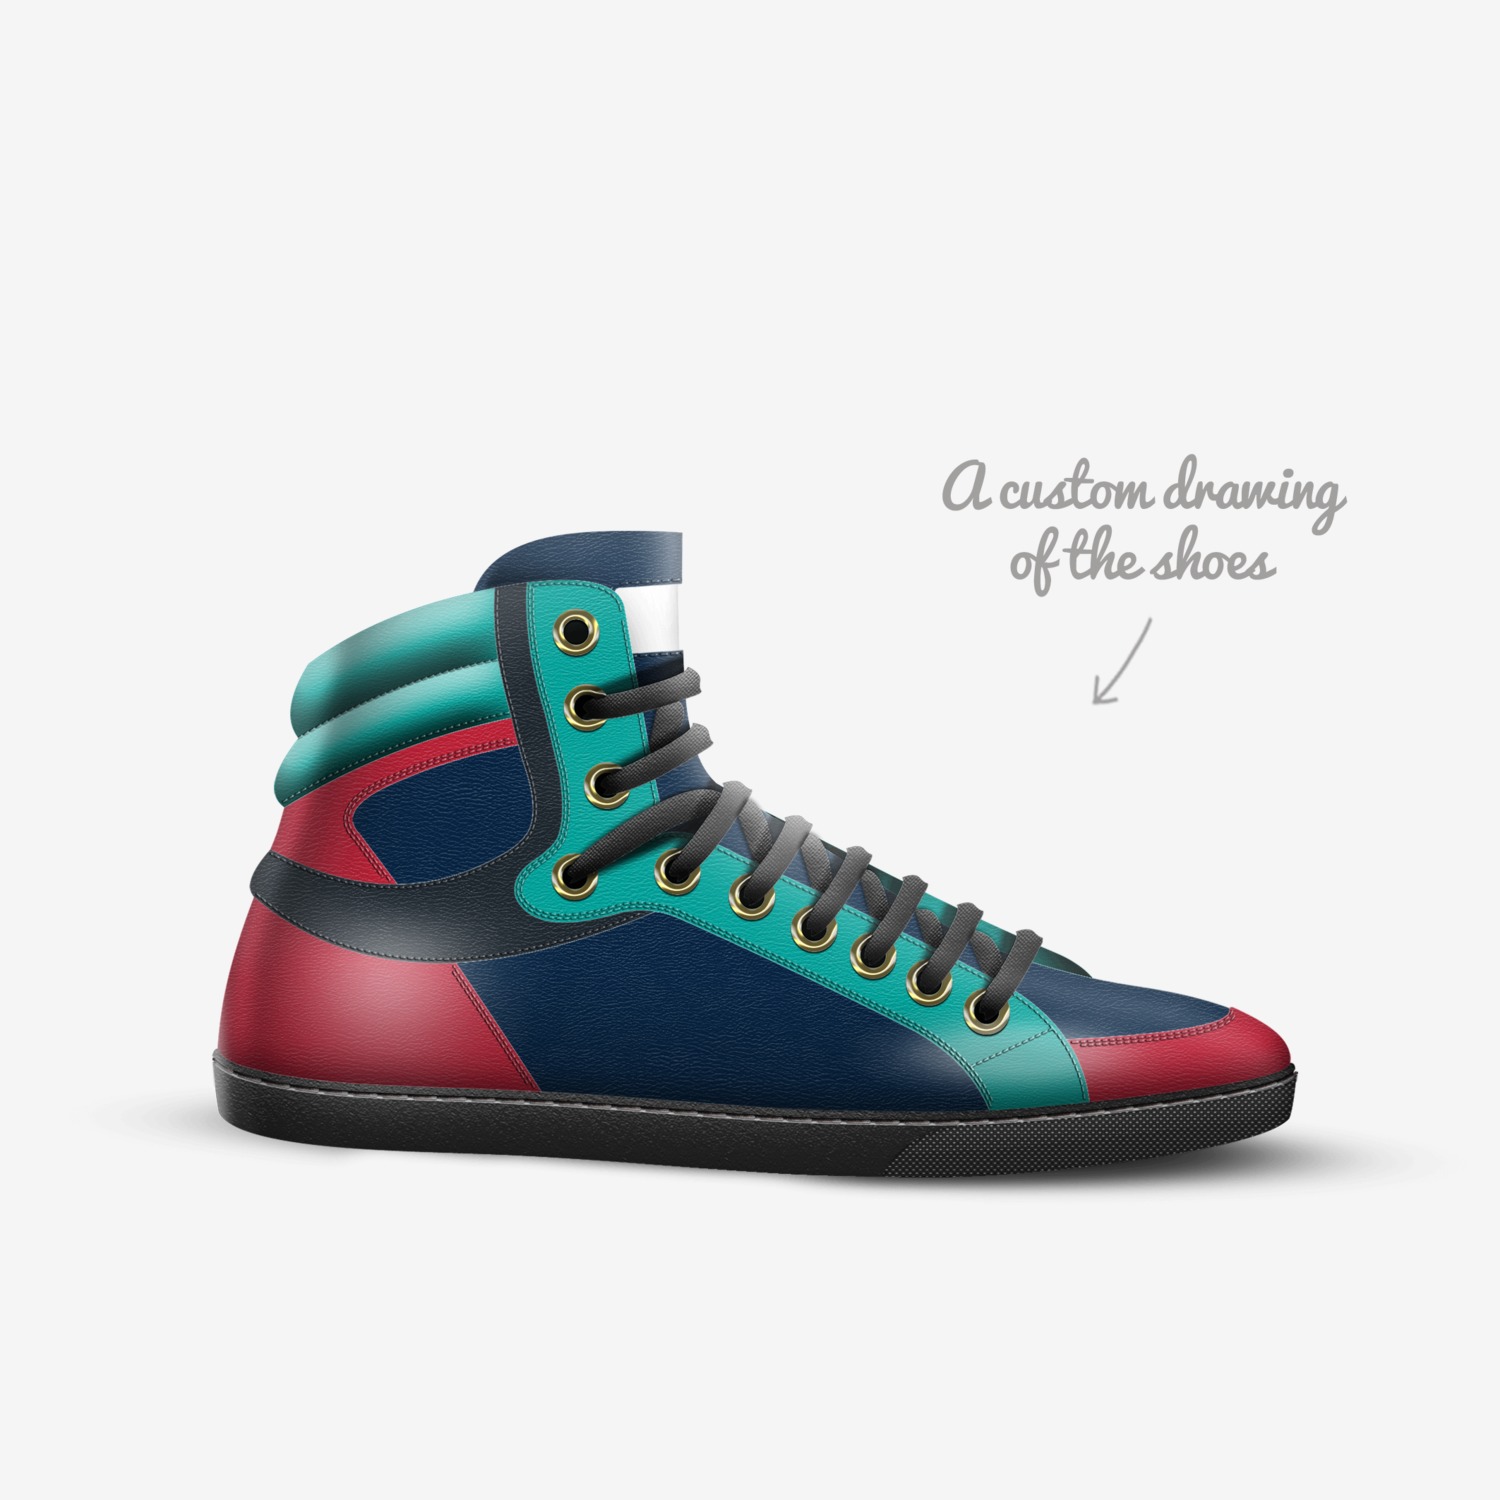 Jay | A Custom Shoe concept by J